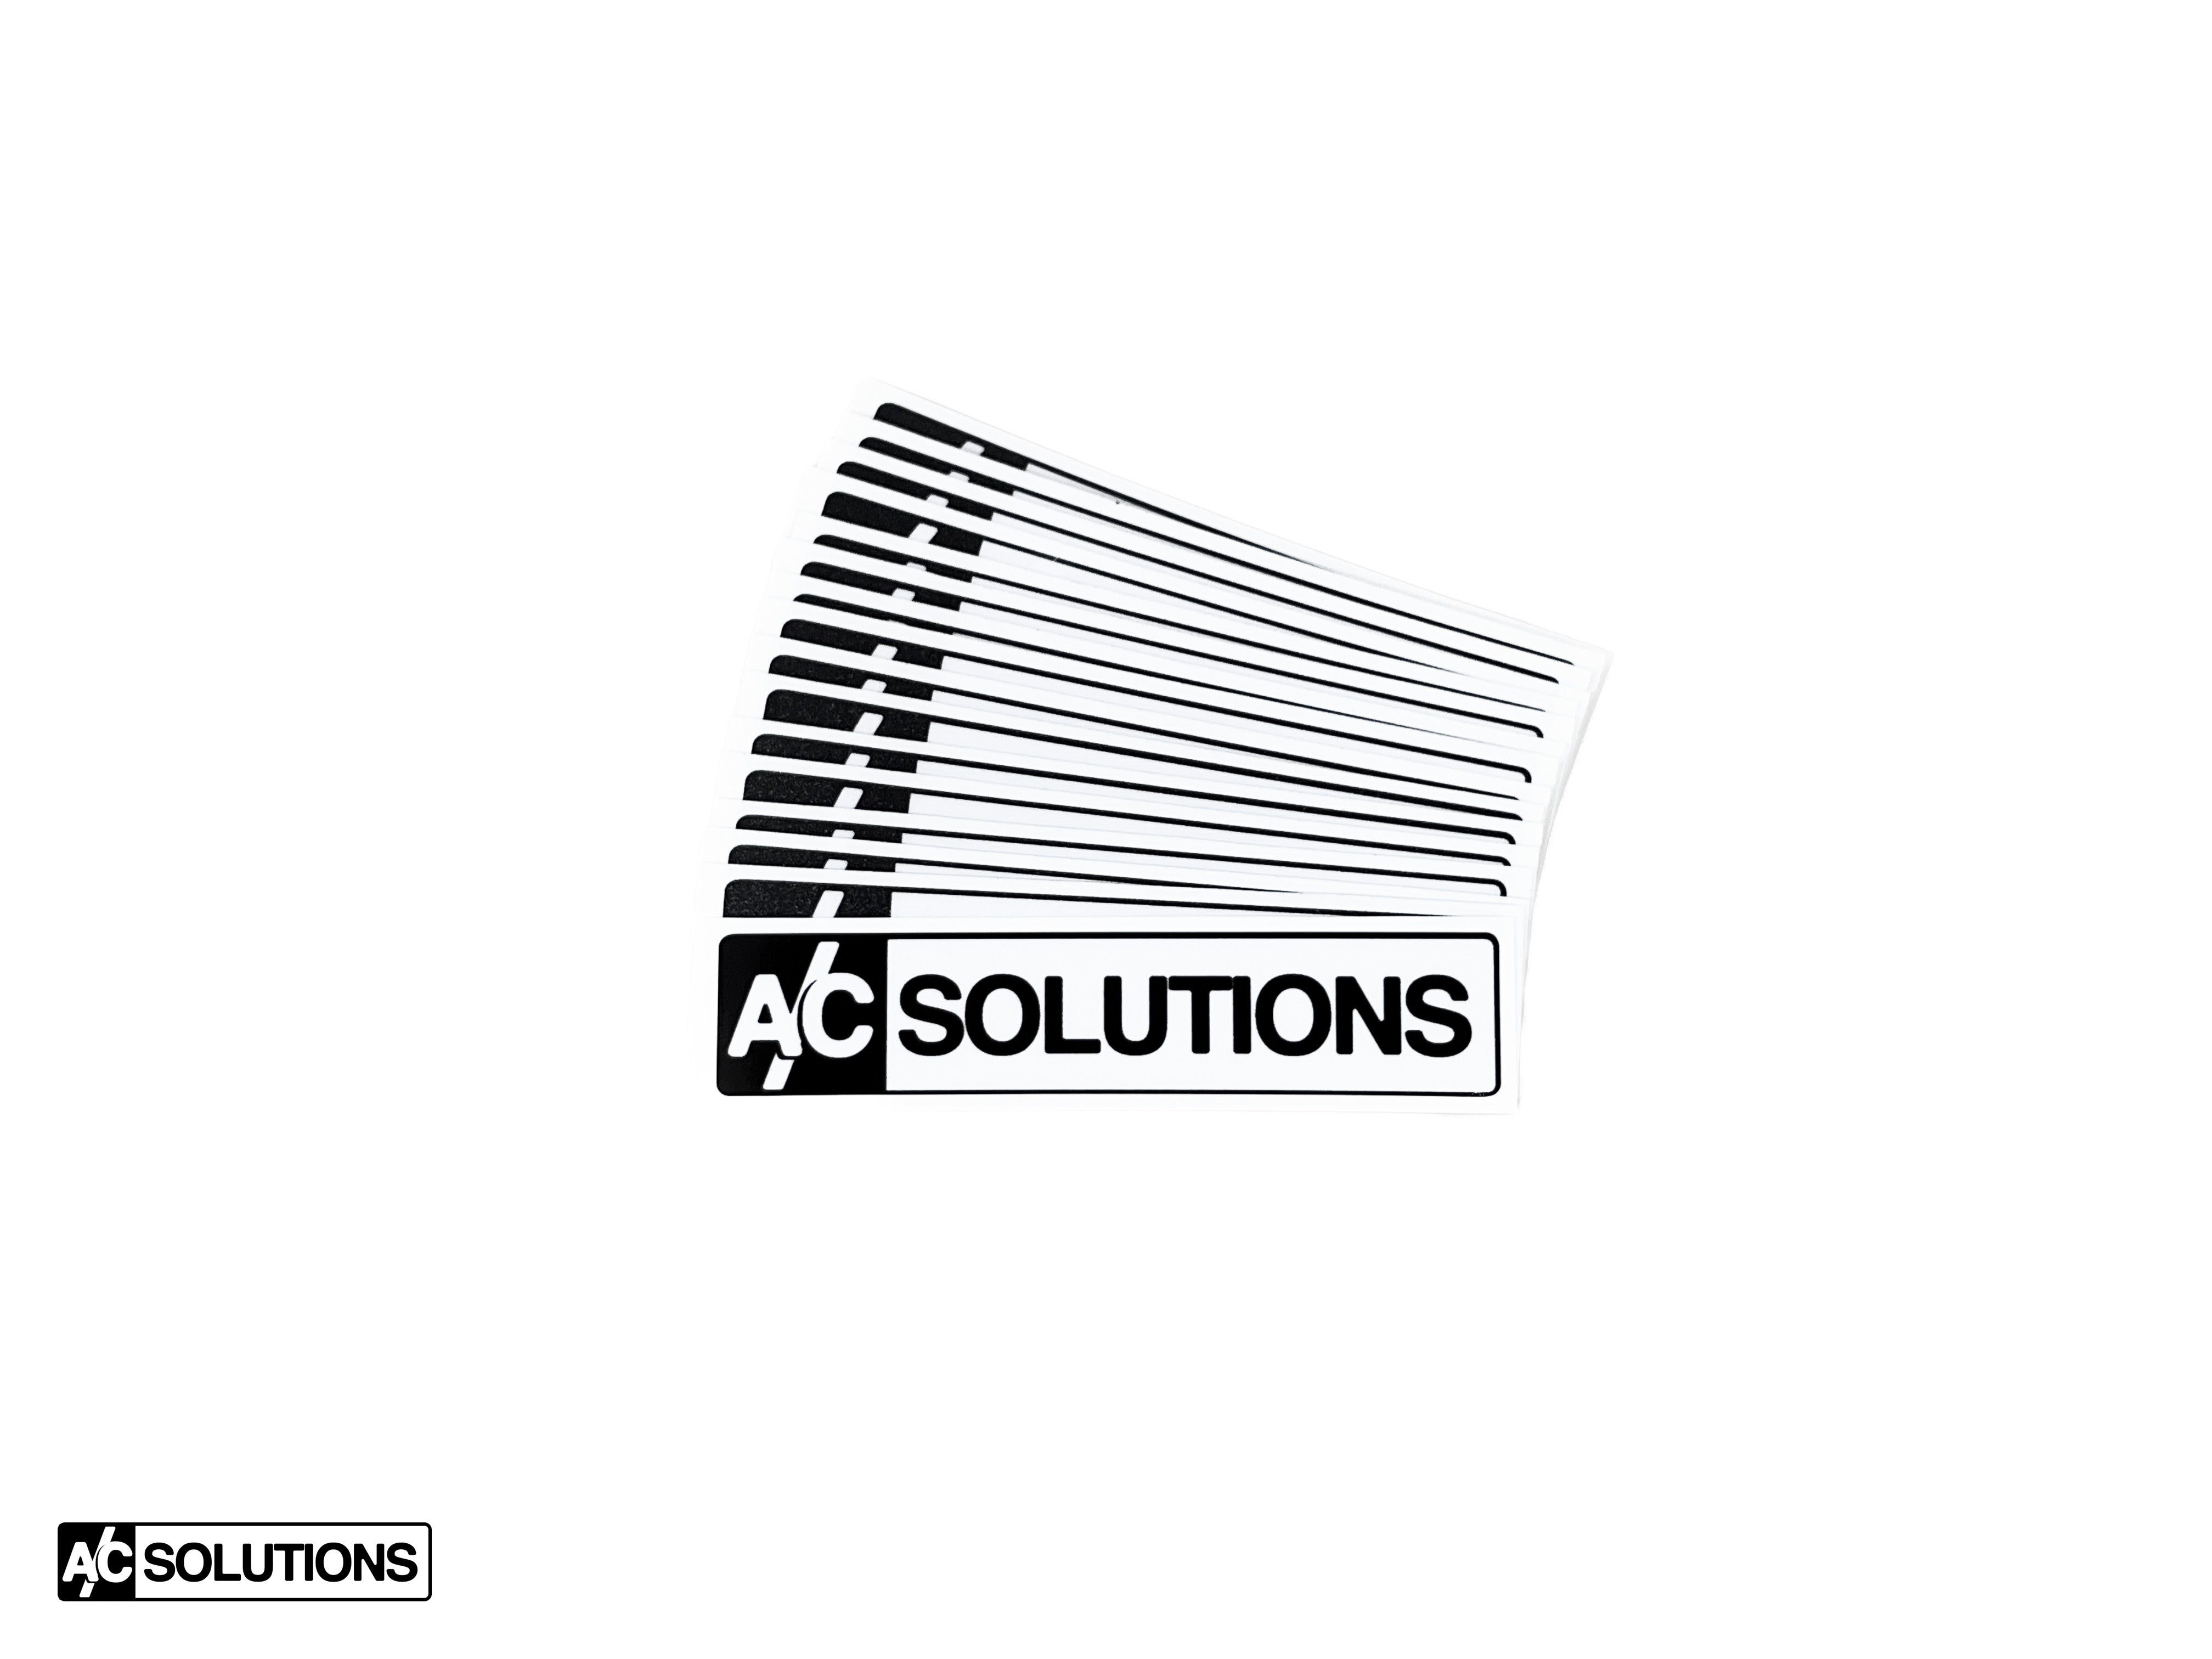 A/C Solutions Box Sticker